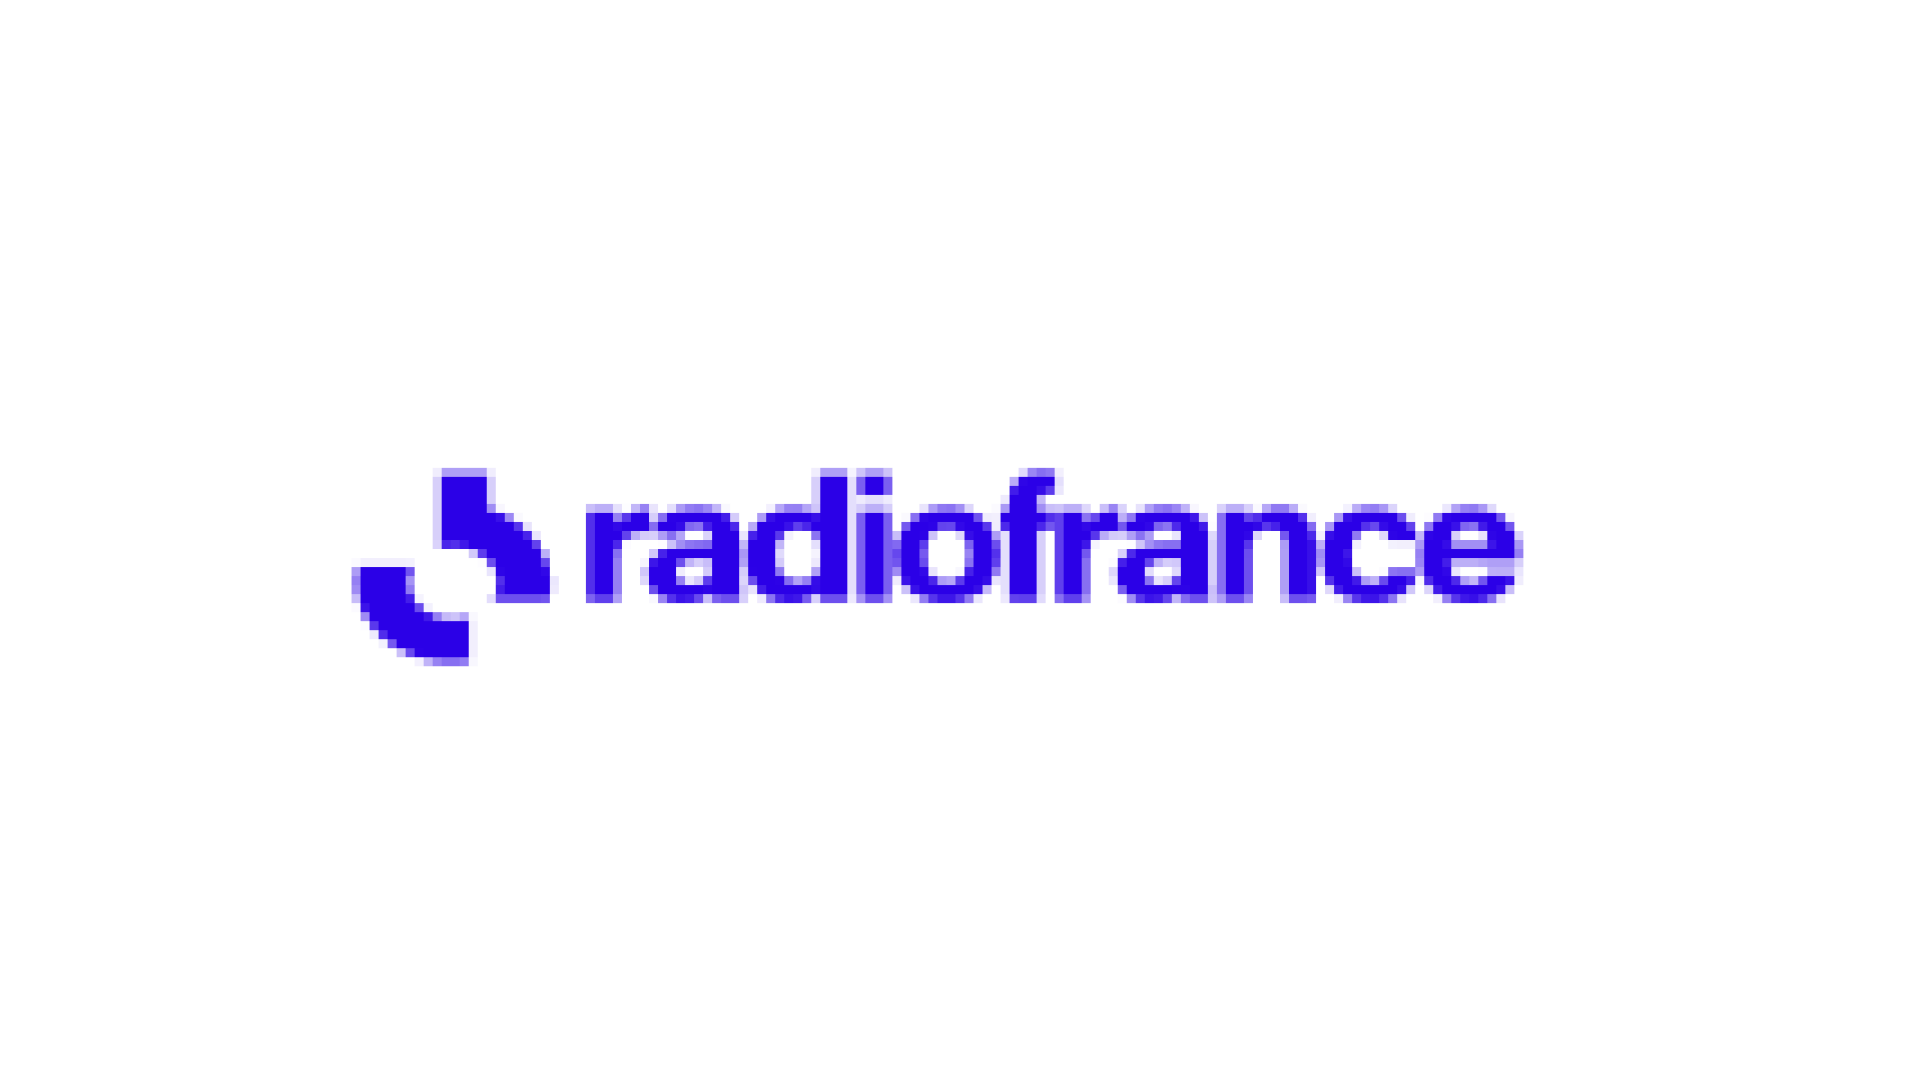 logo radio france